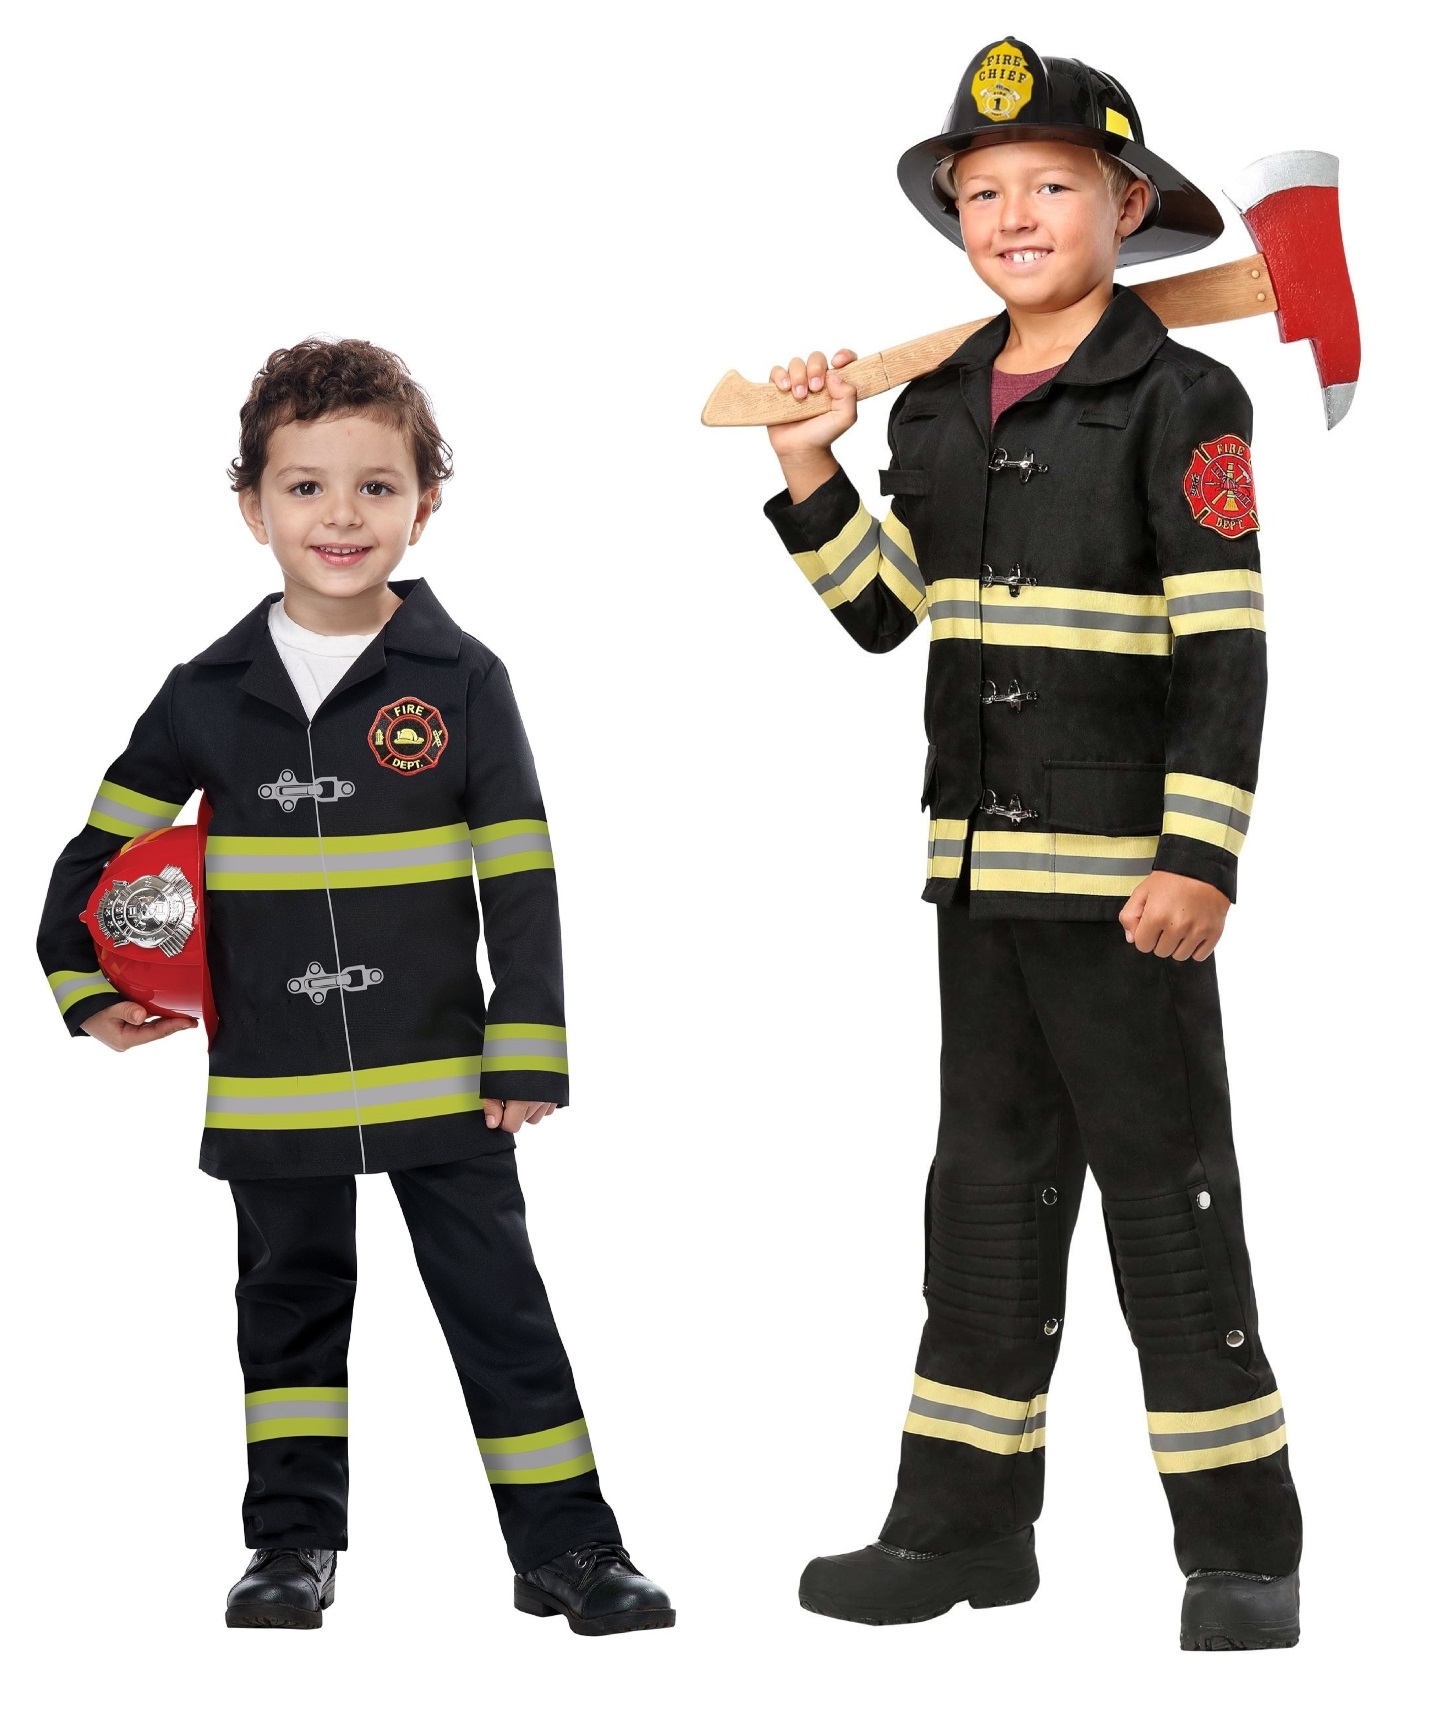 Firefighter Costume Comparison